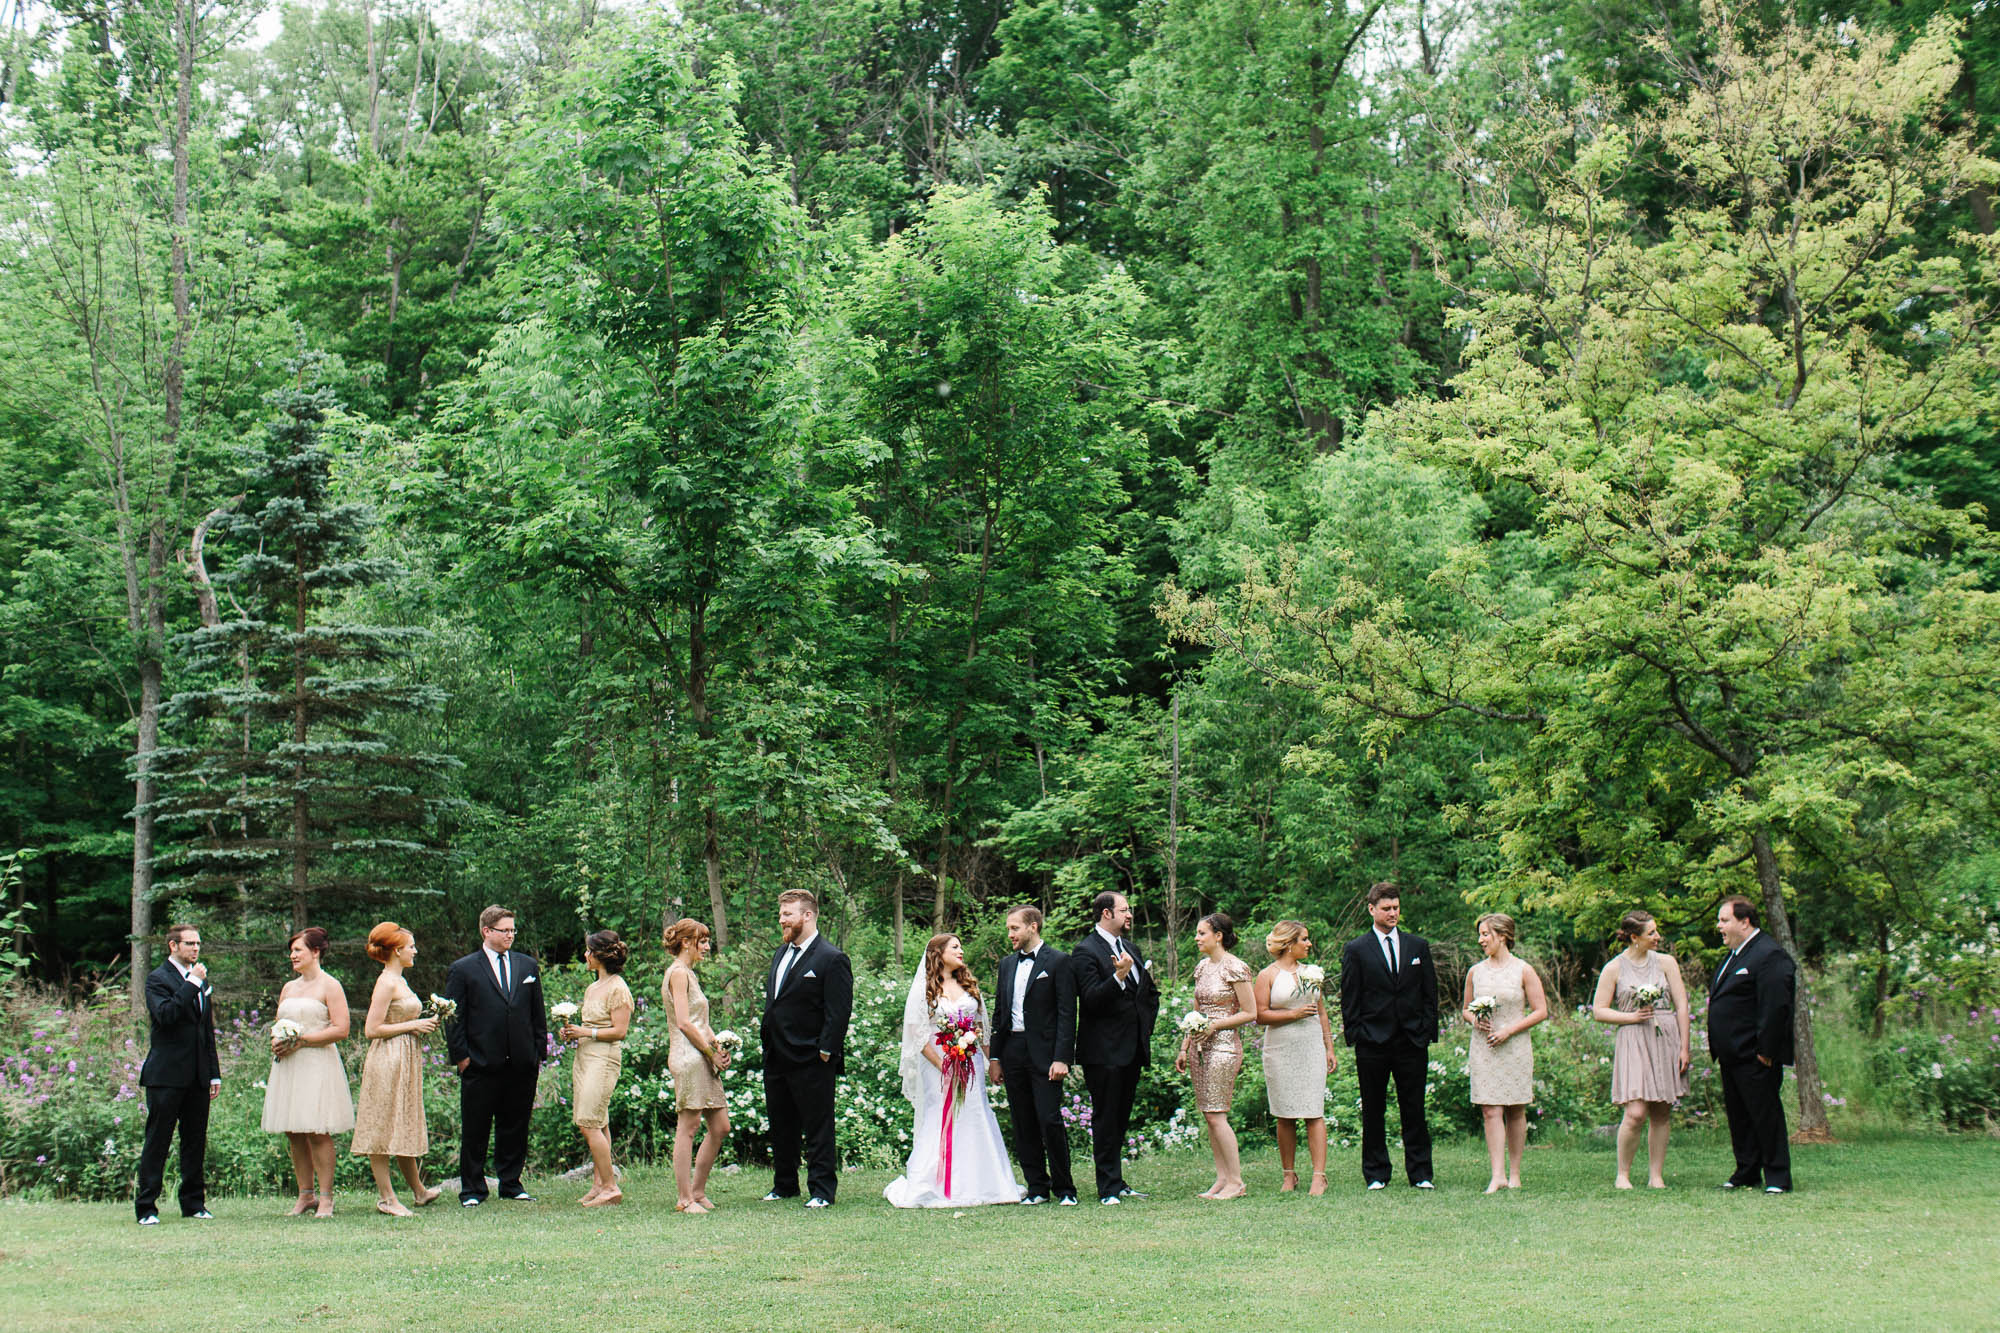 www-marycostaphotography-com-buffalo-ny-wedding-064